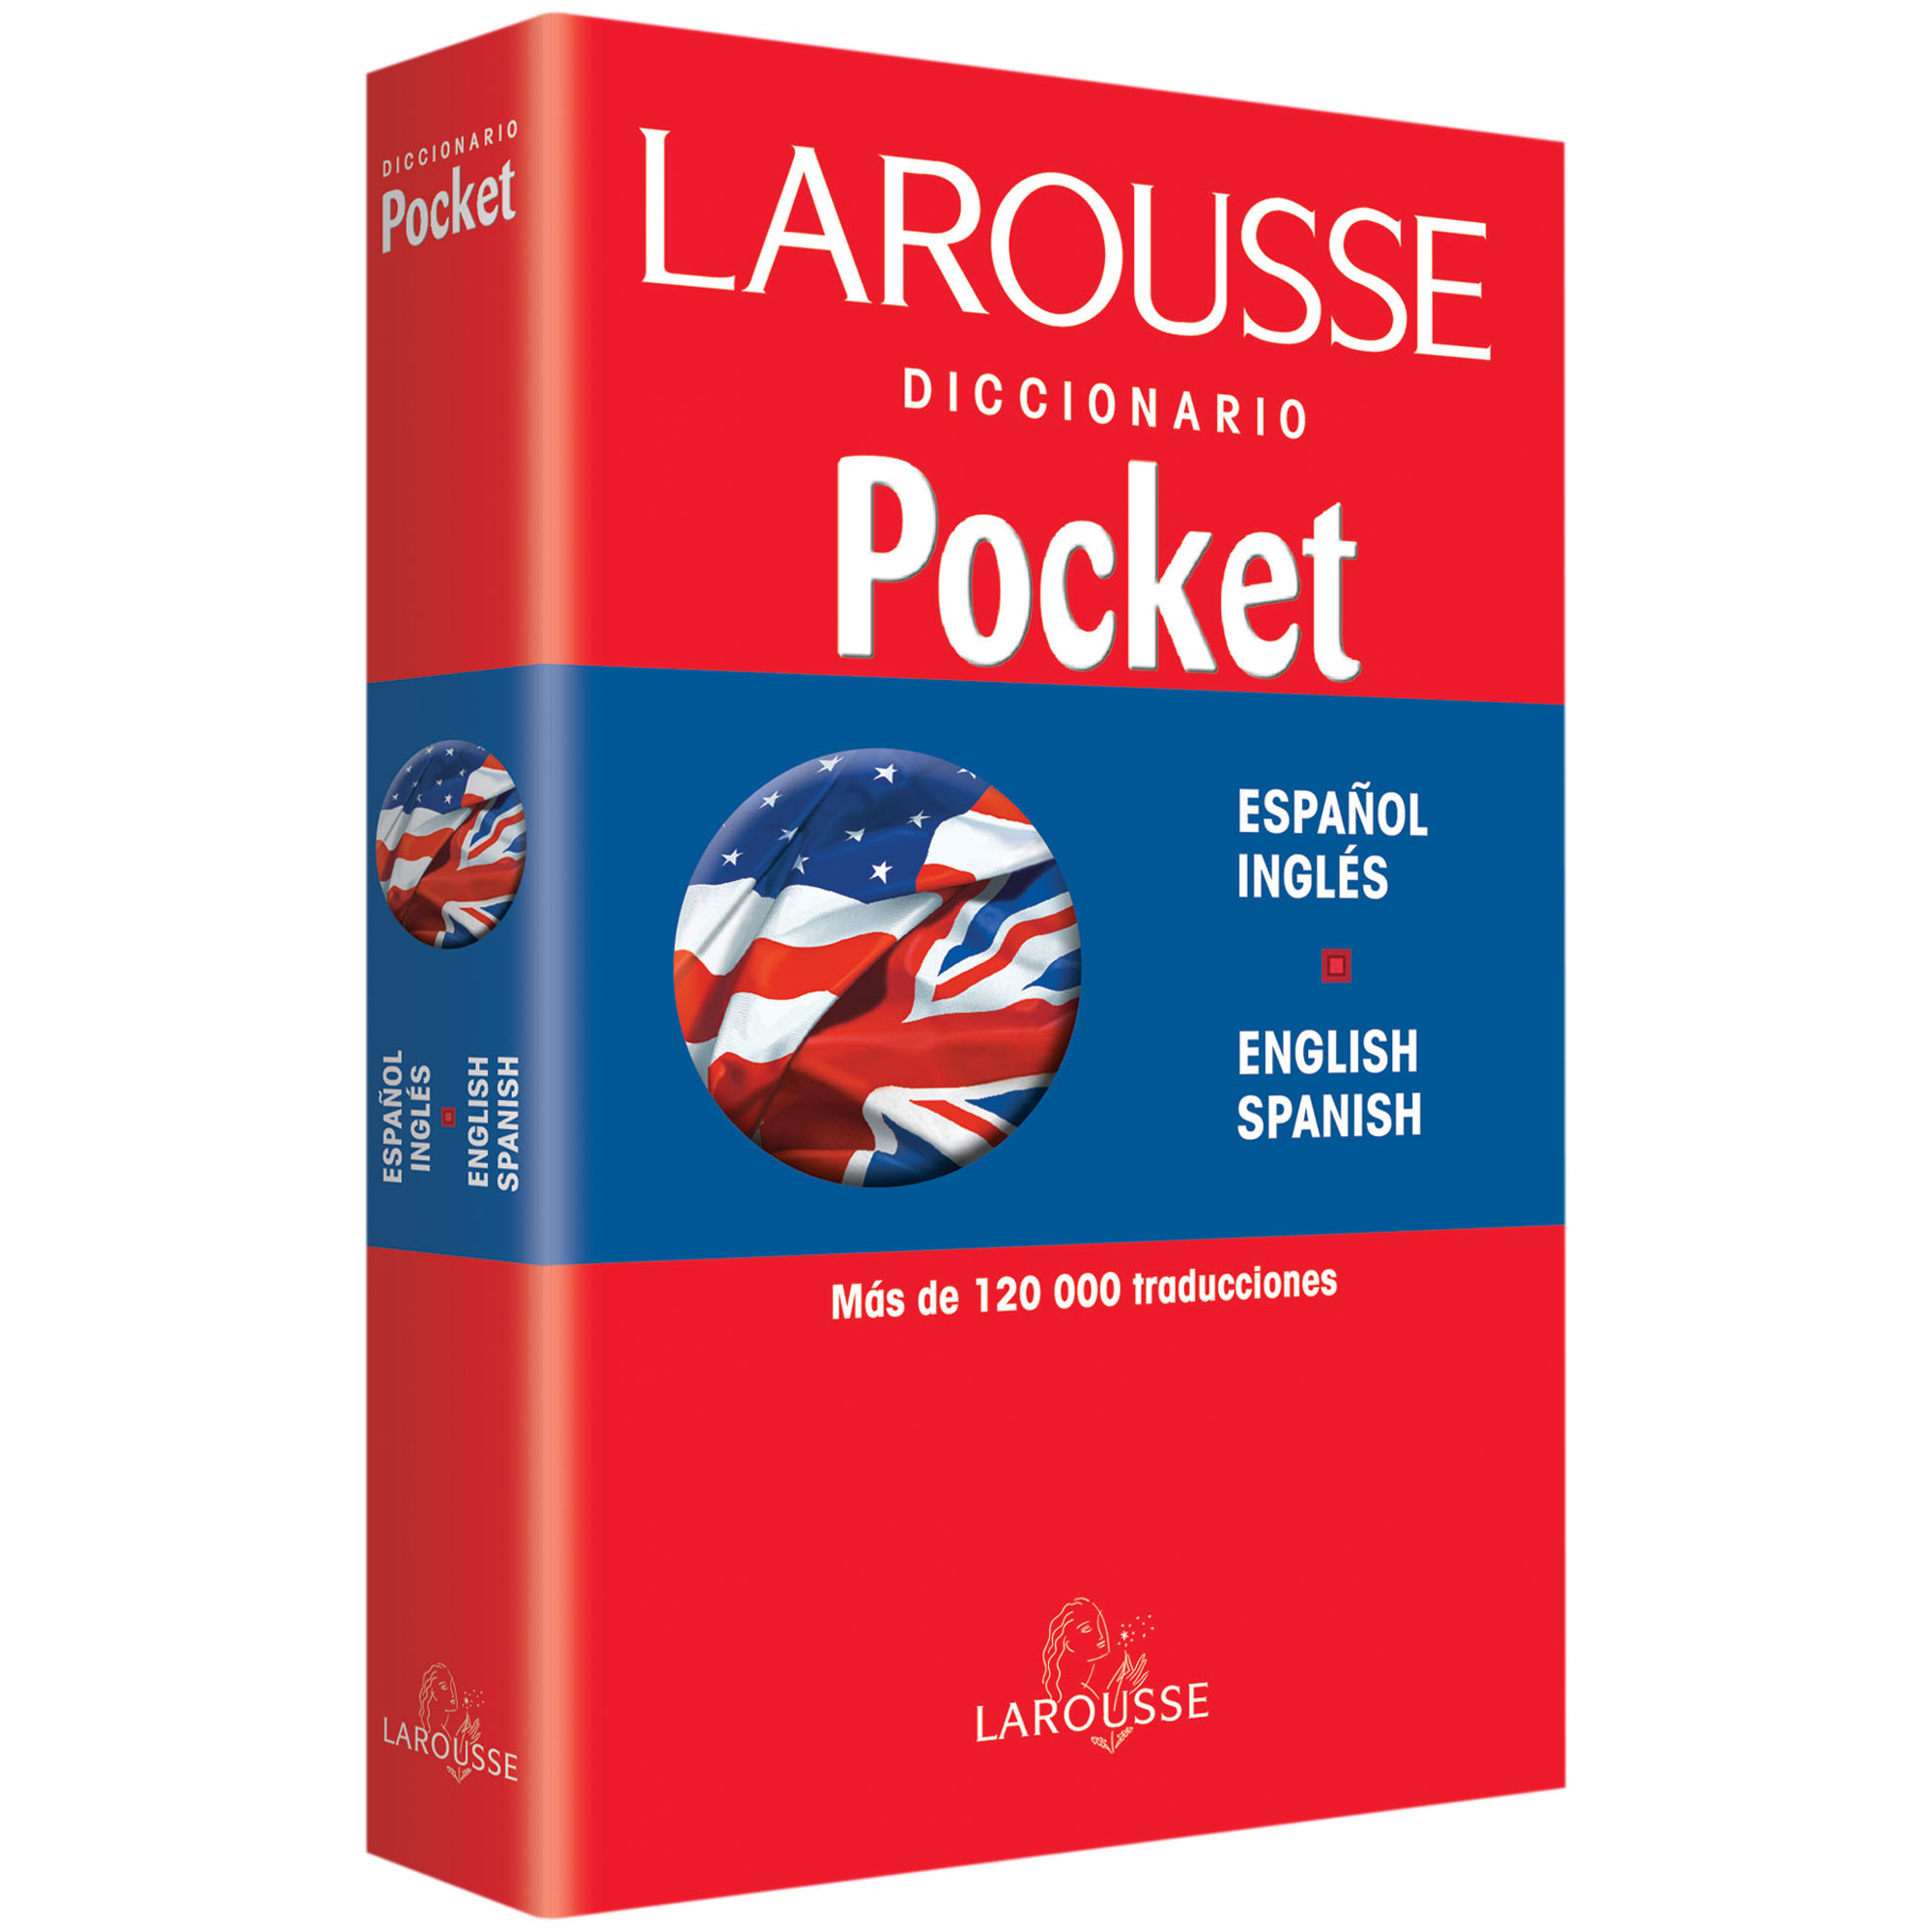 Diccionario Pocket Español Ingles Larousse Delsol 0547